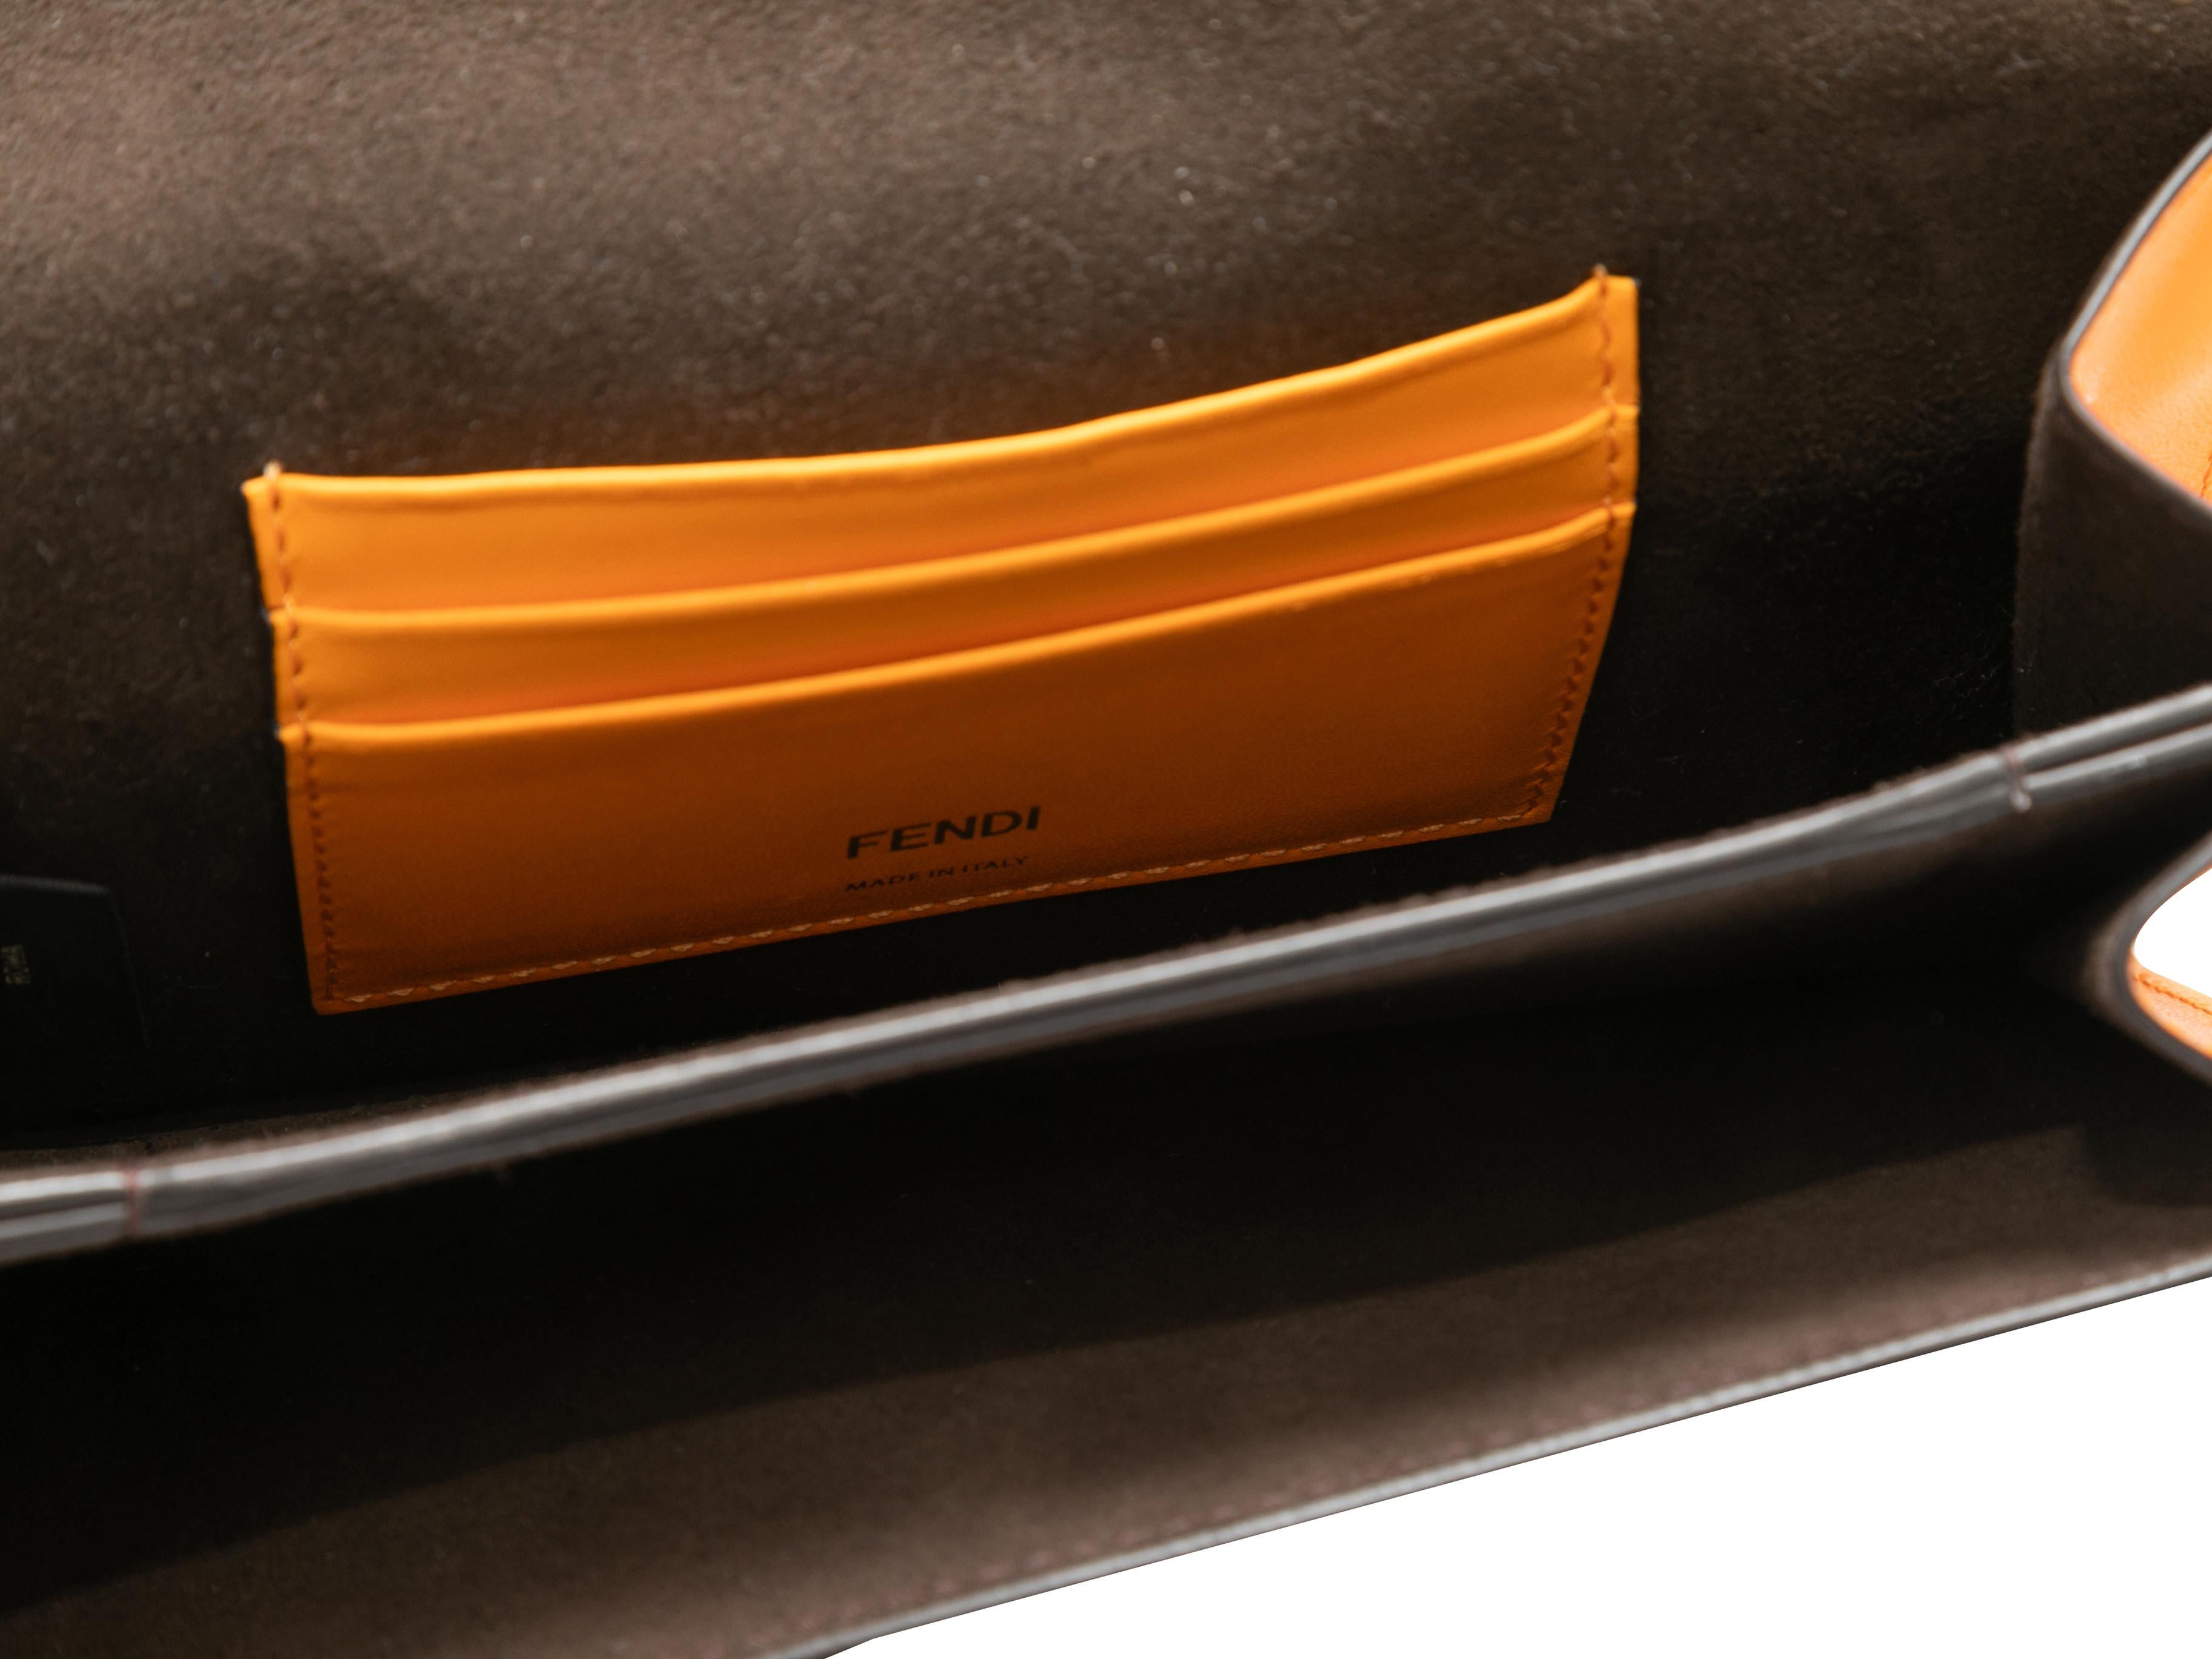 Orange Fendi Mini Crossbody Bag In Excellent Condition For Sale In New York, NY